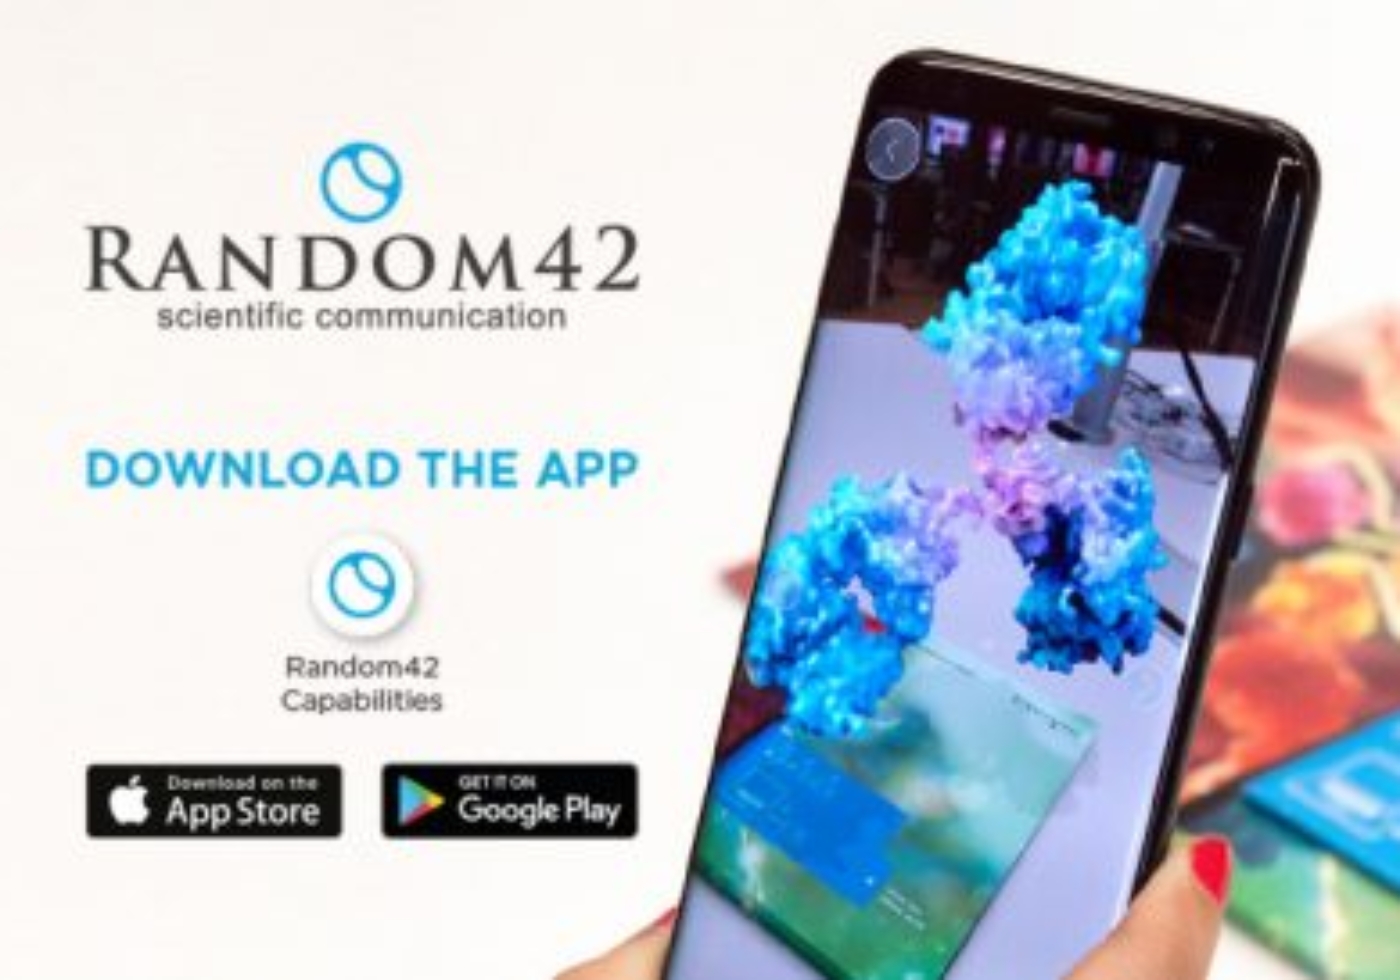 Random42 mobile app launch